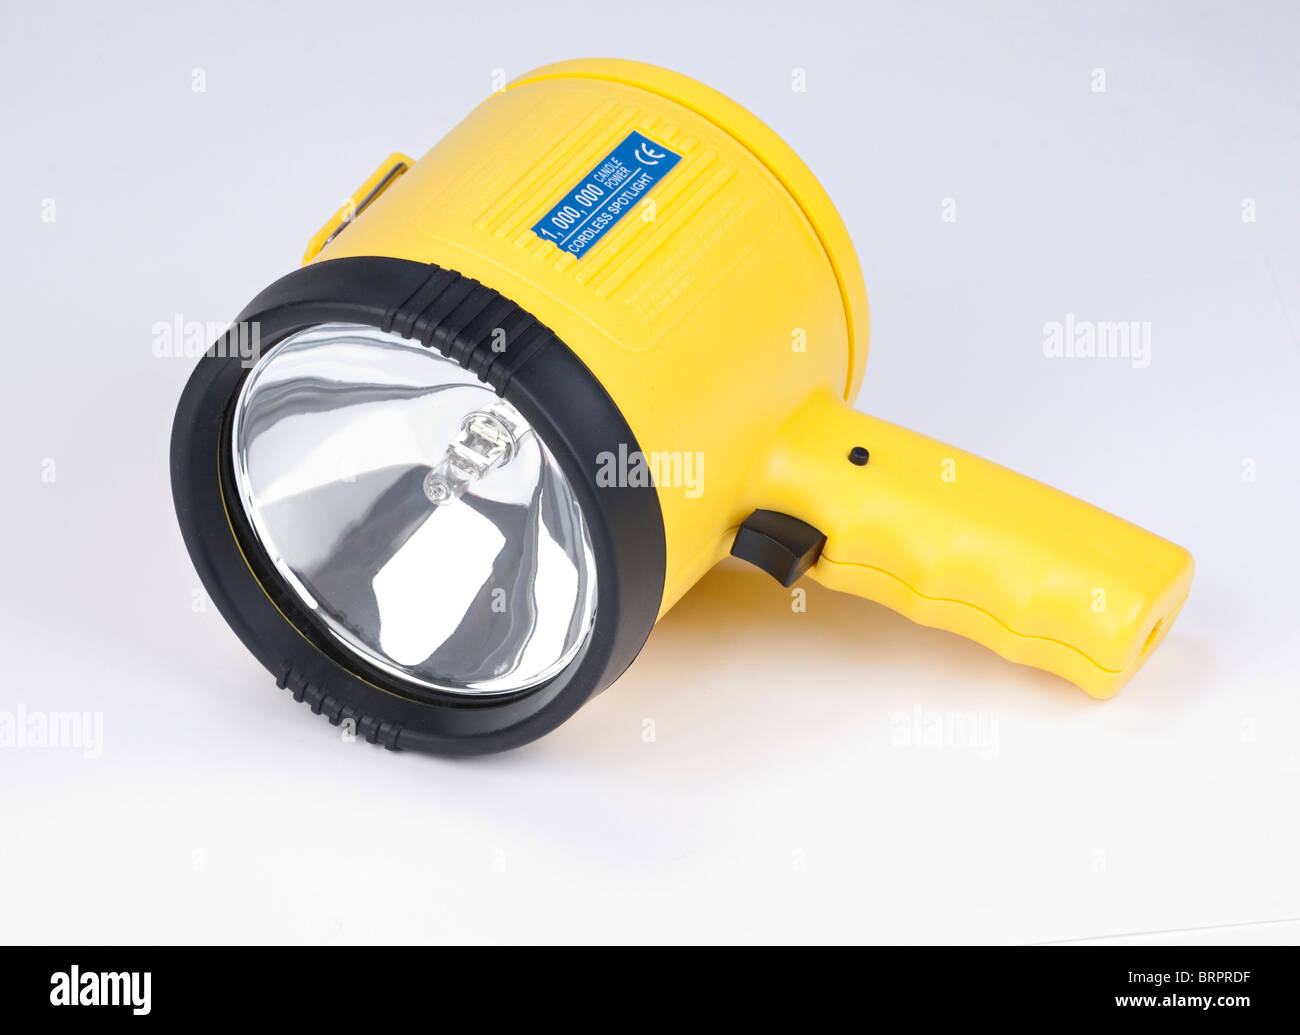 halogen torch / flashlight Stock Photo